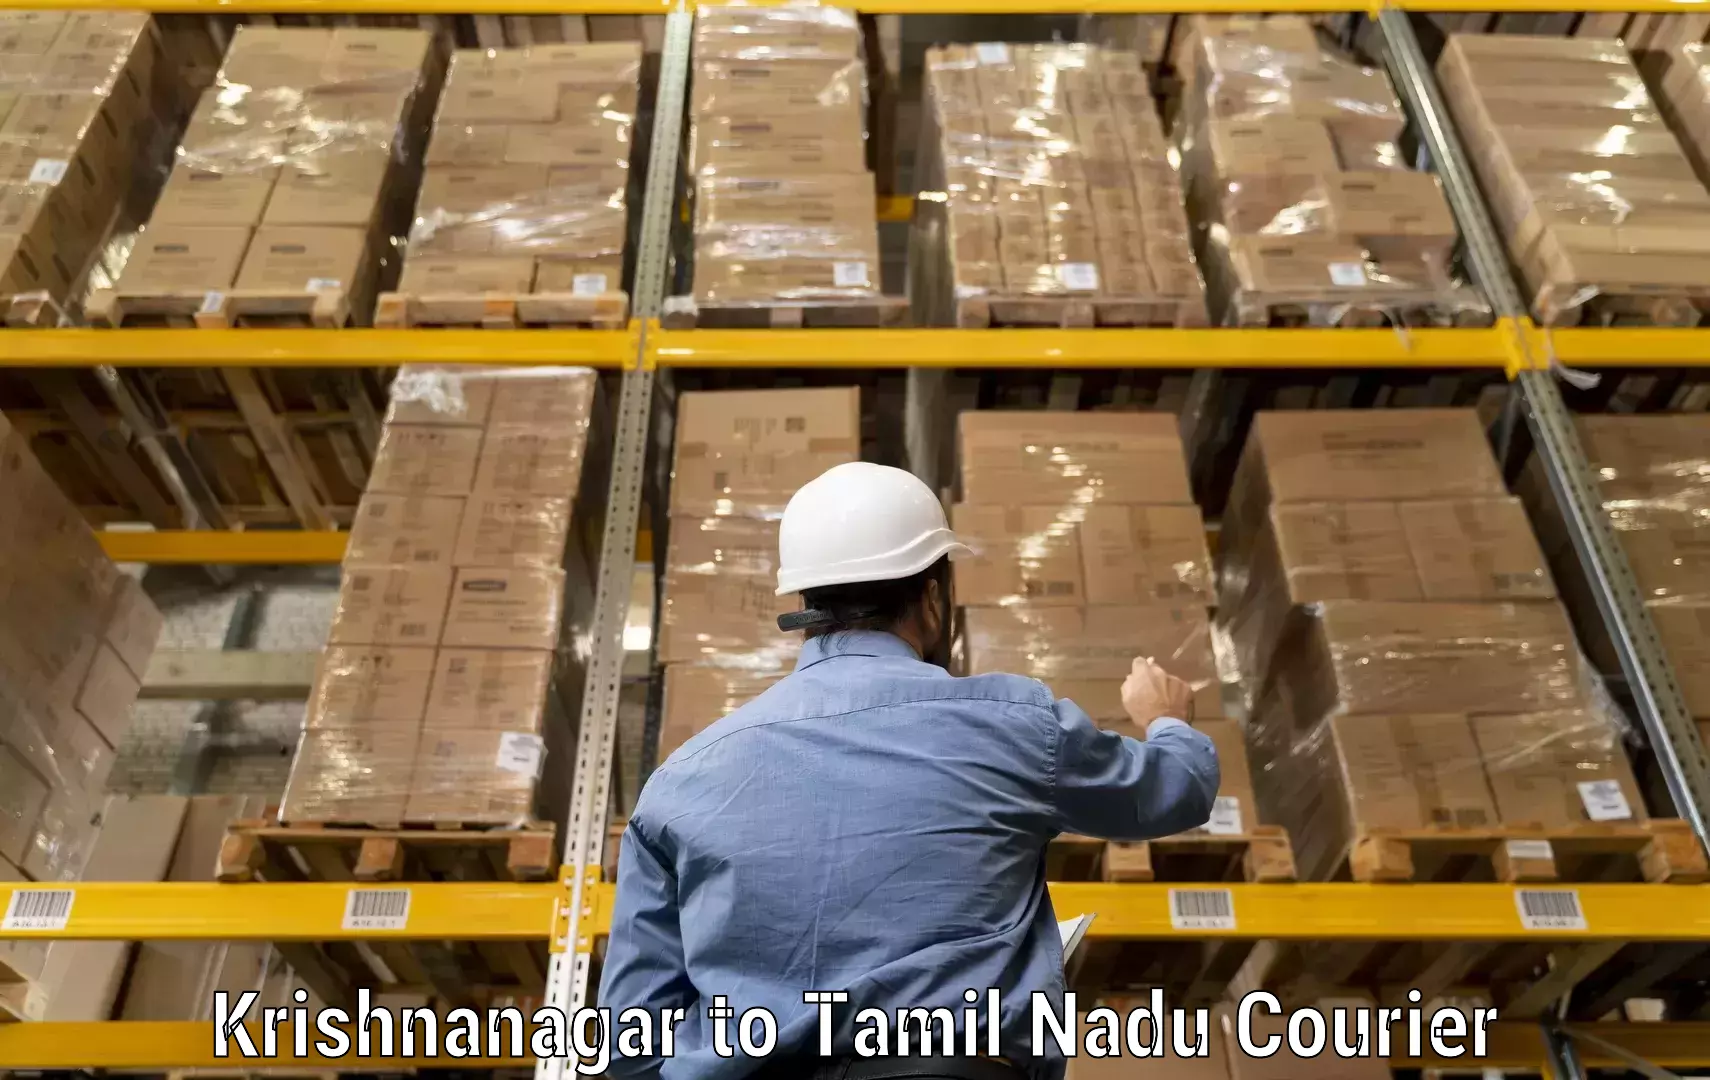 Global shipping networks Krishnanagar to Marakkanam